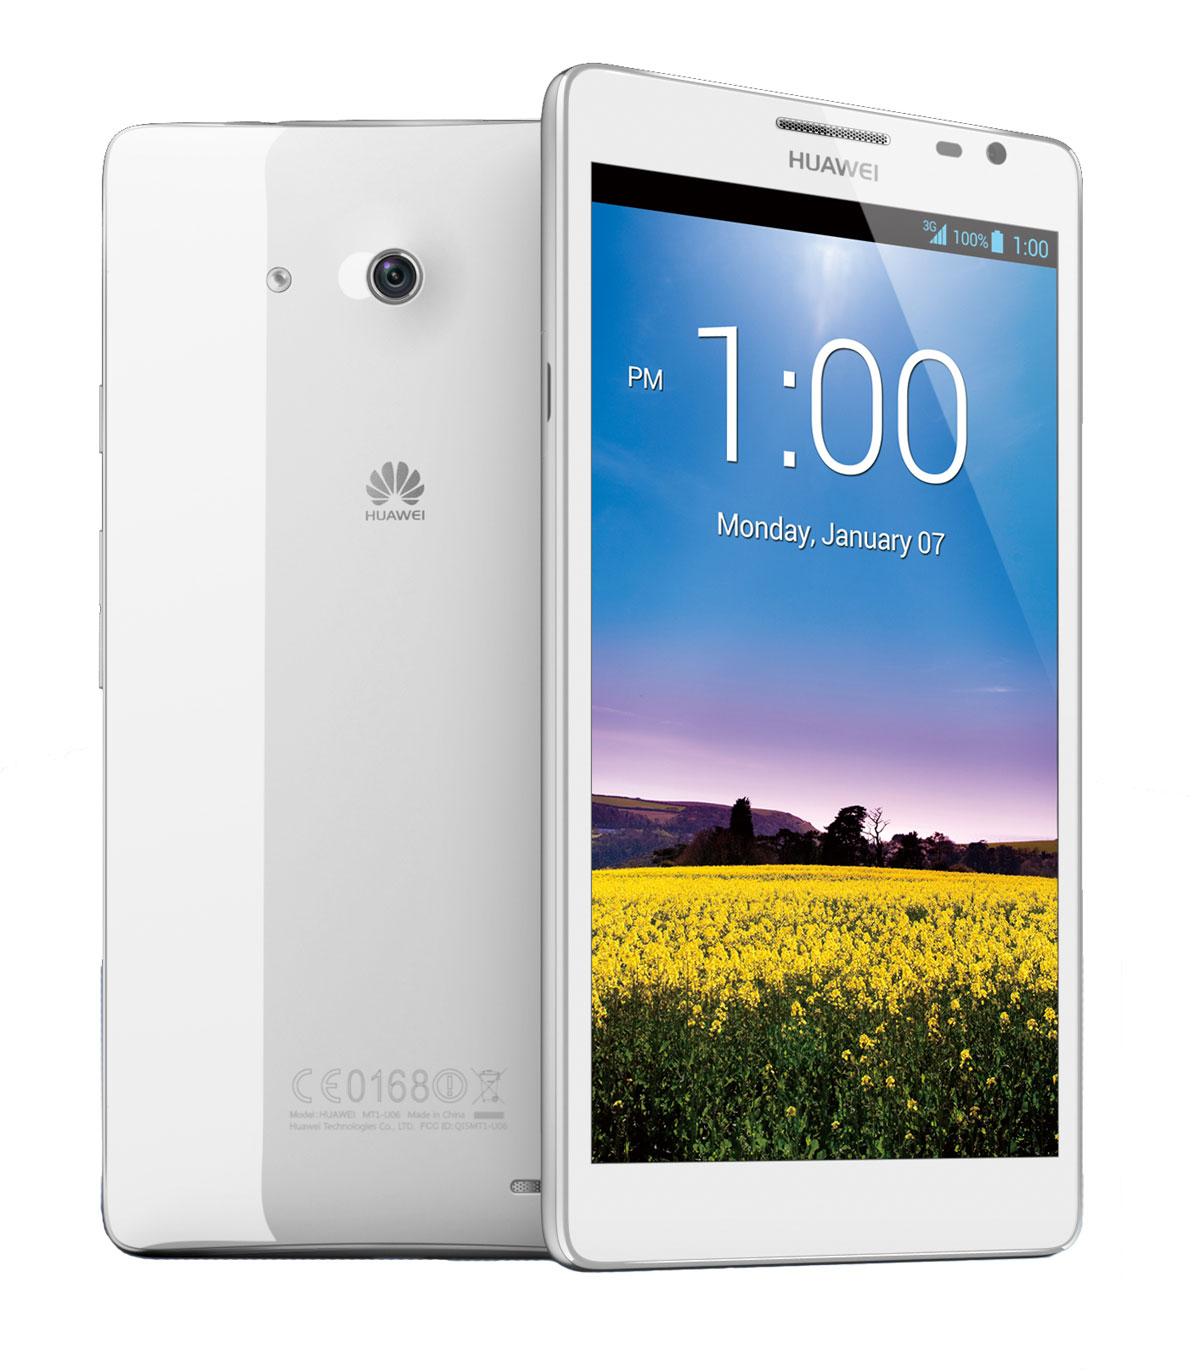 Huawei Ascend Mate en color blanco